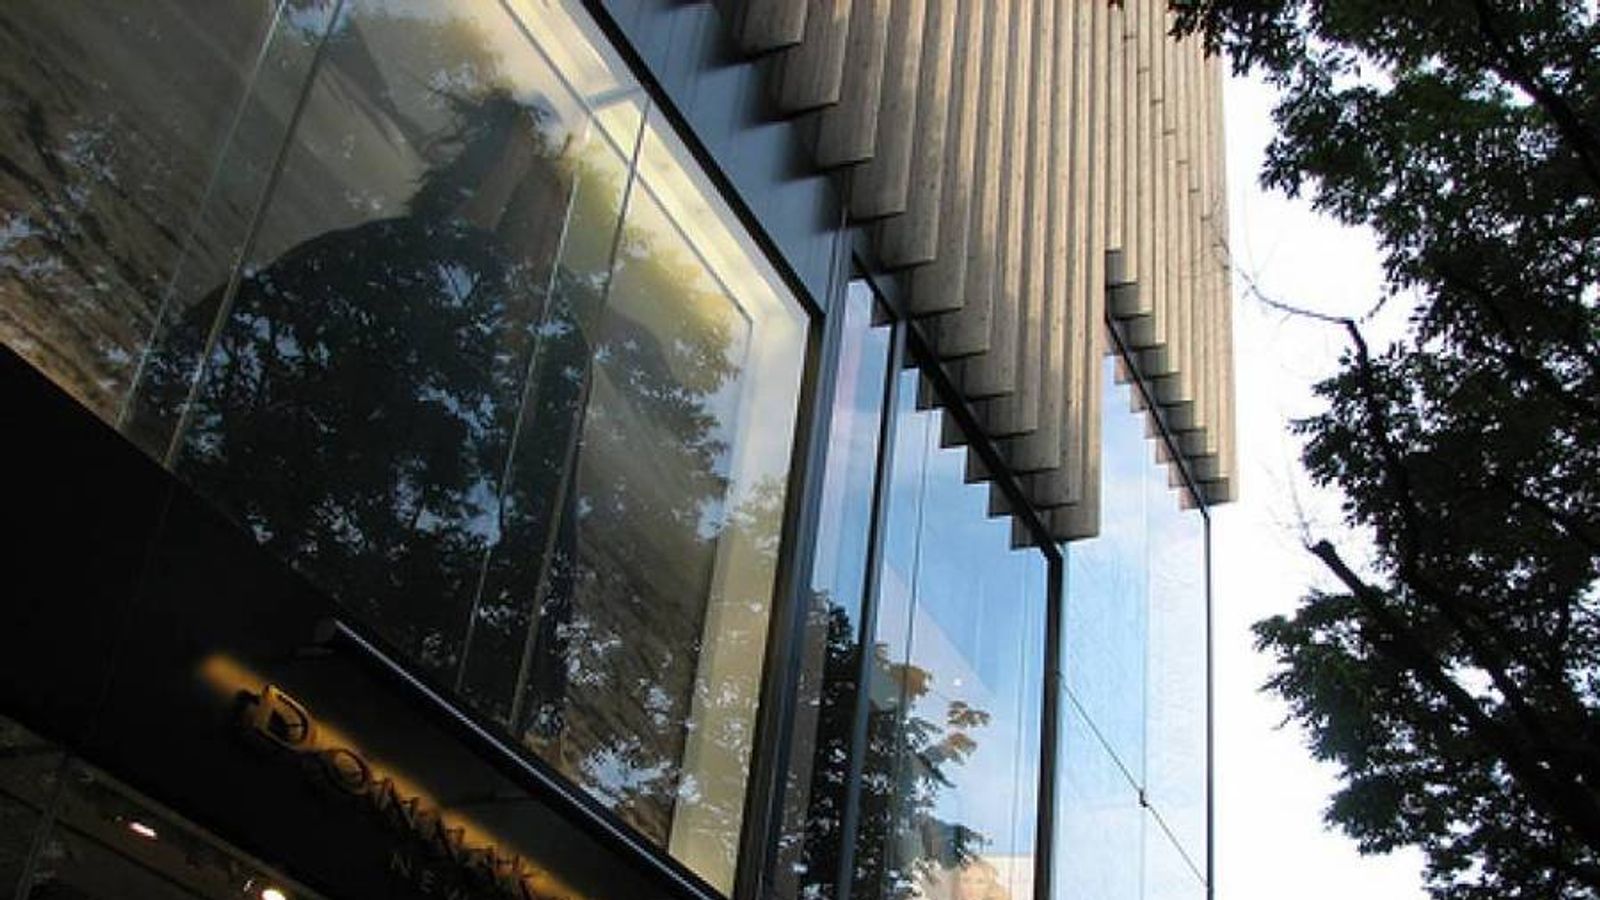 Louis Vuitton Omotesando Building, Projects